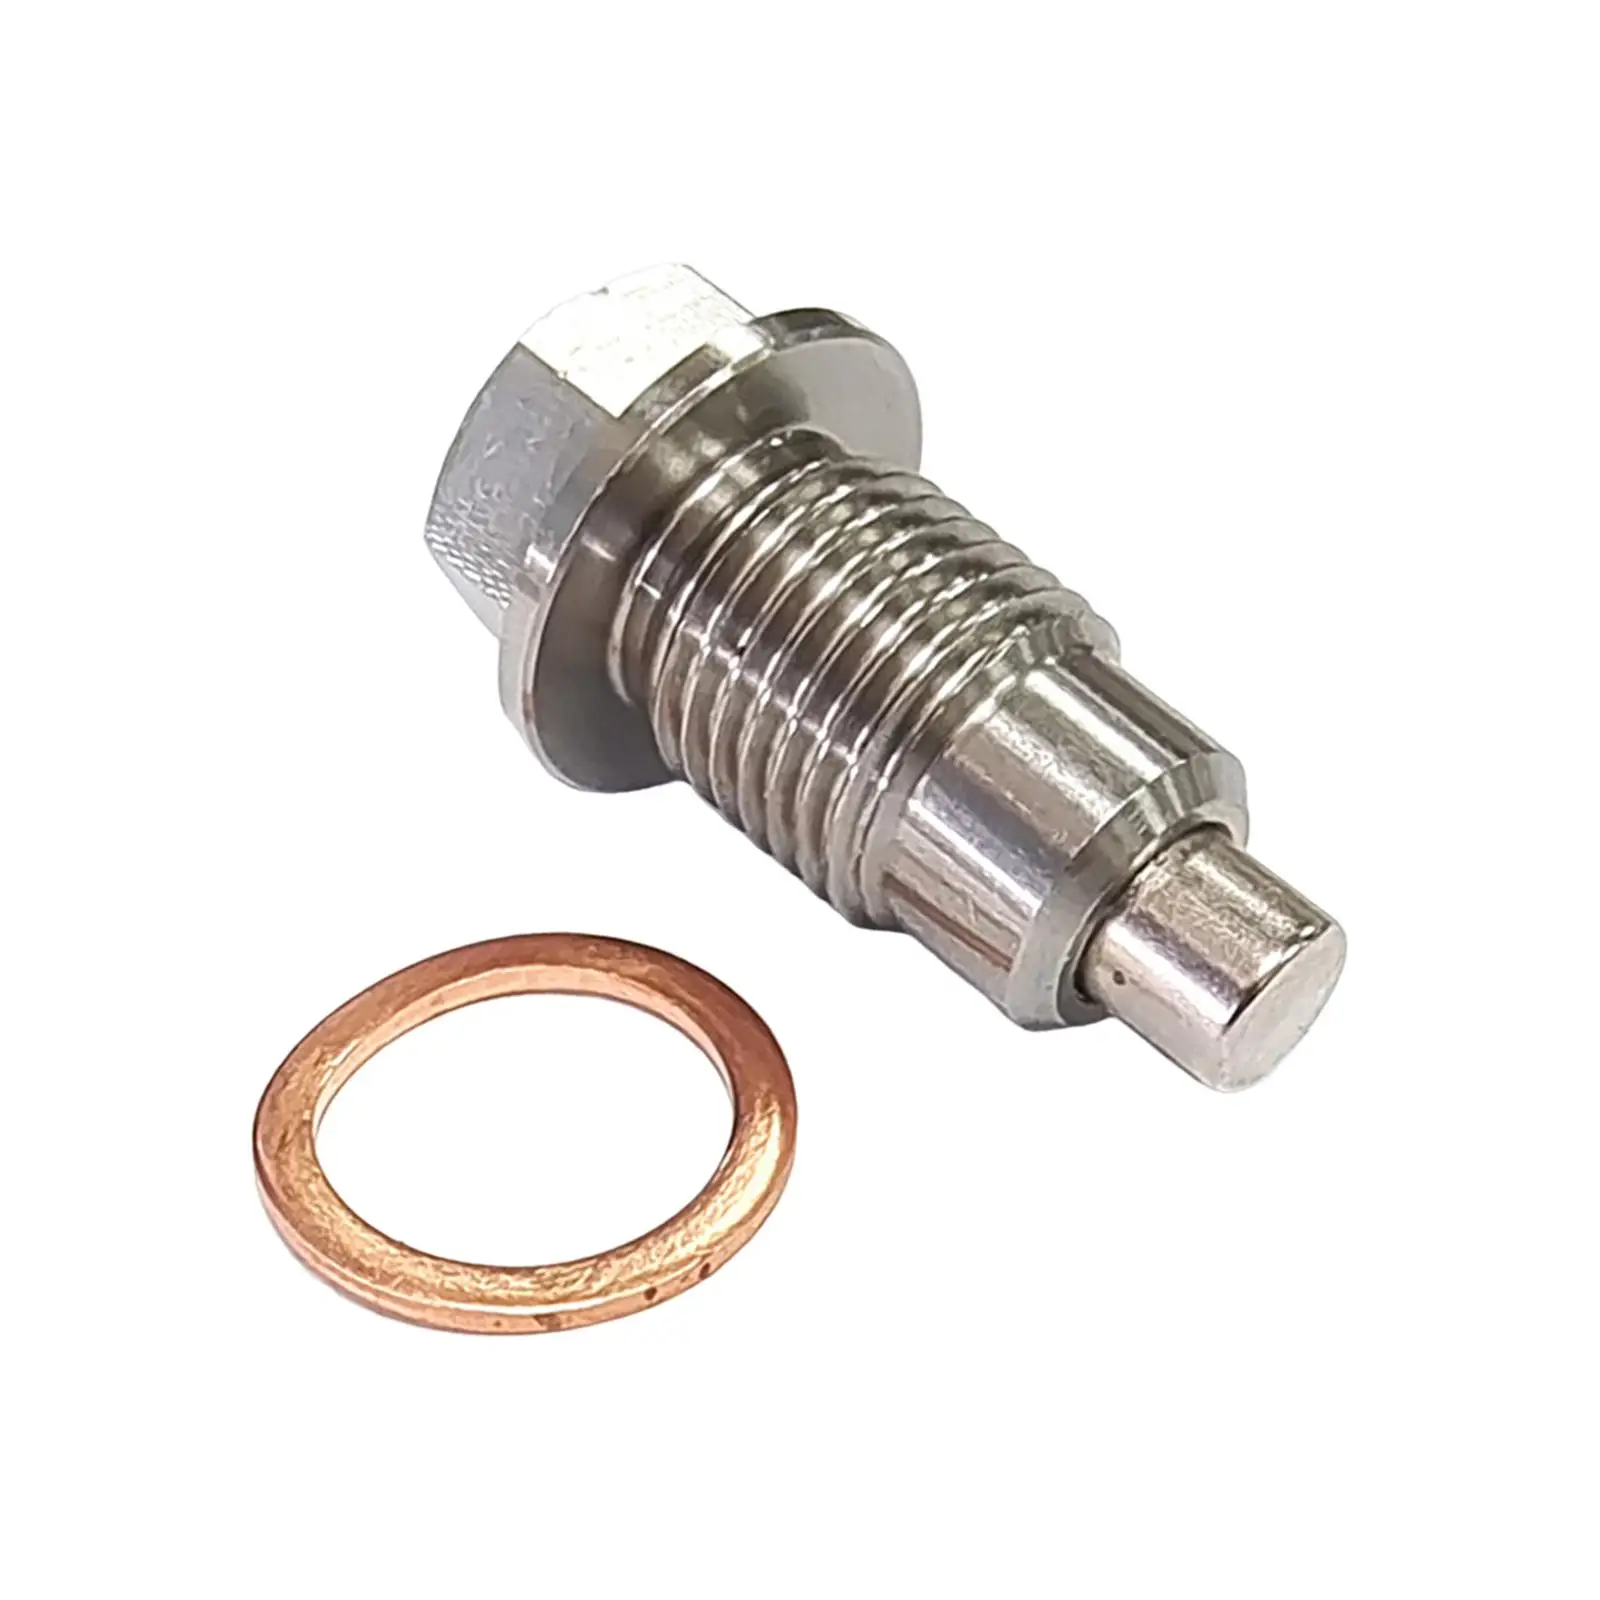 Oil Drain Plug Screw M12x1.25 Anti Leak with Cooper Washer Replace Accessory Sump Drain Nut Neodymium Magnet Bolt for Car